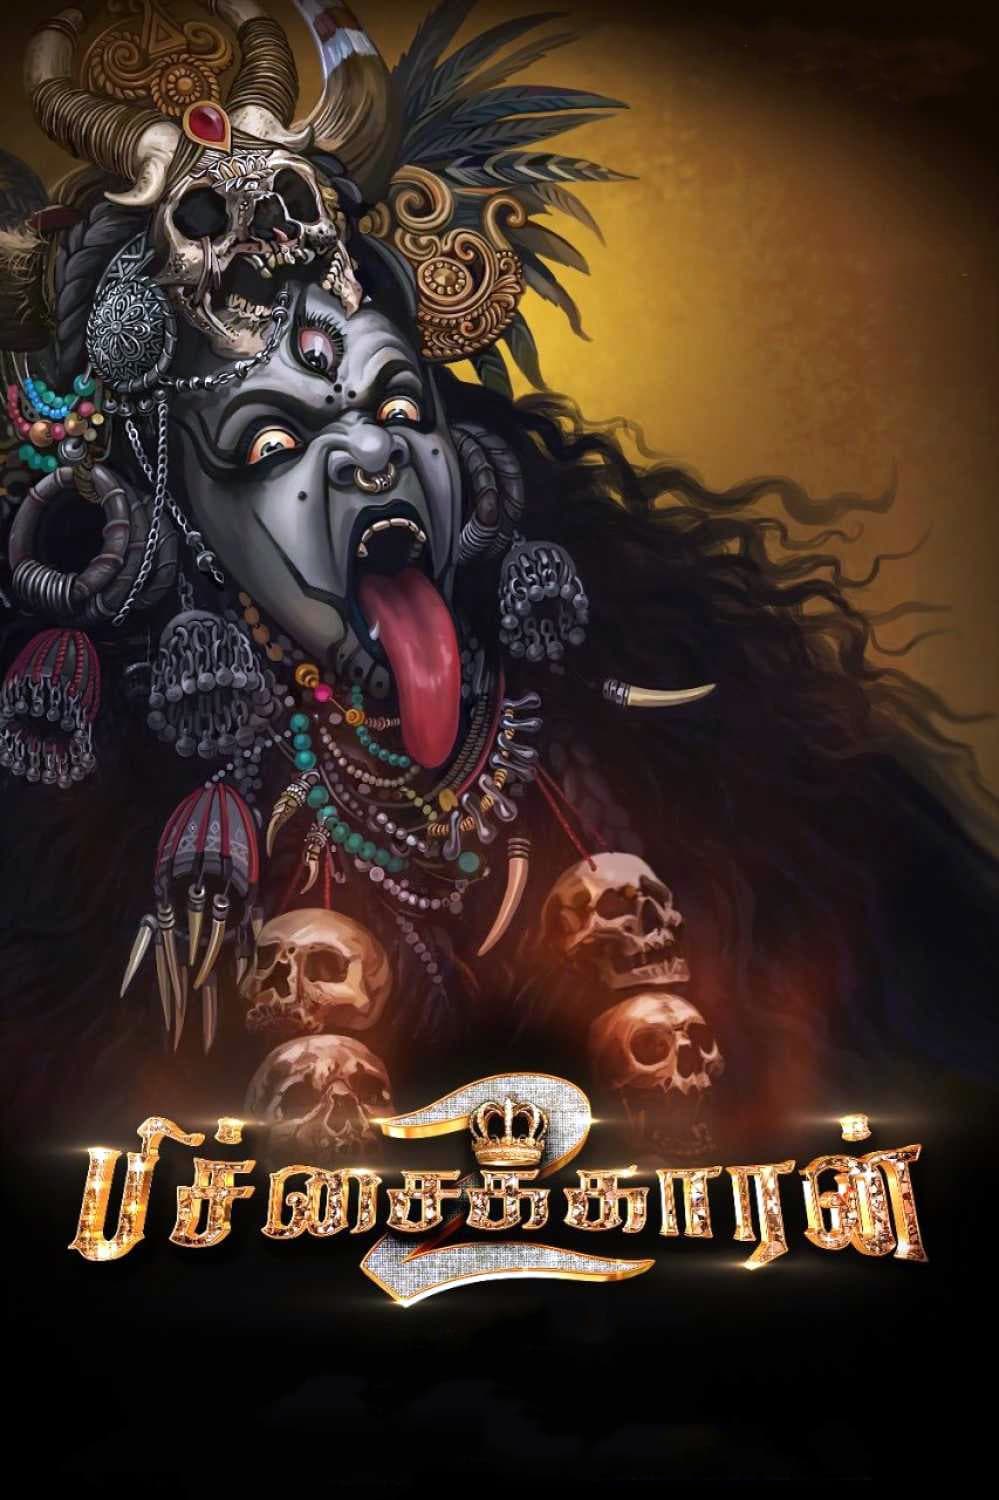 Poster for the movie "Pichaikkaran 2"